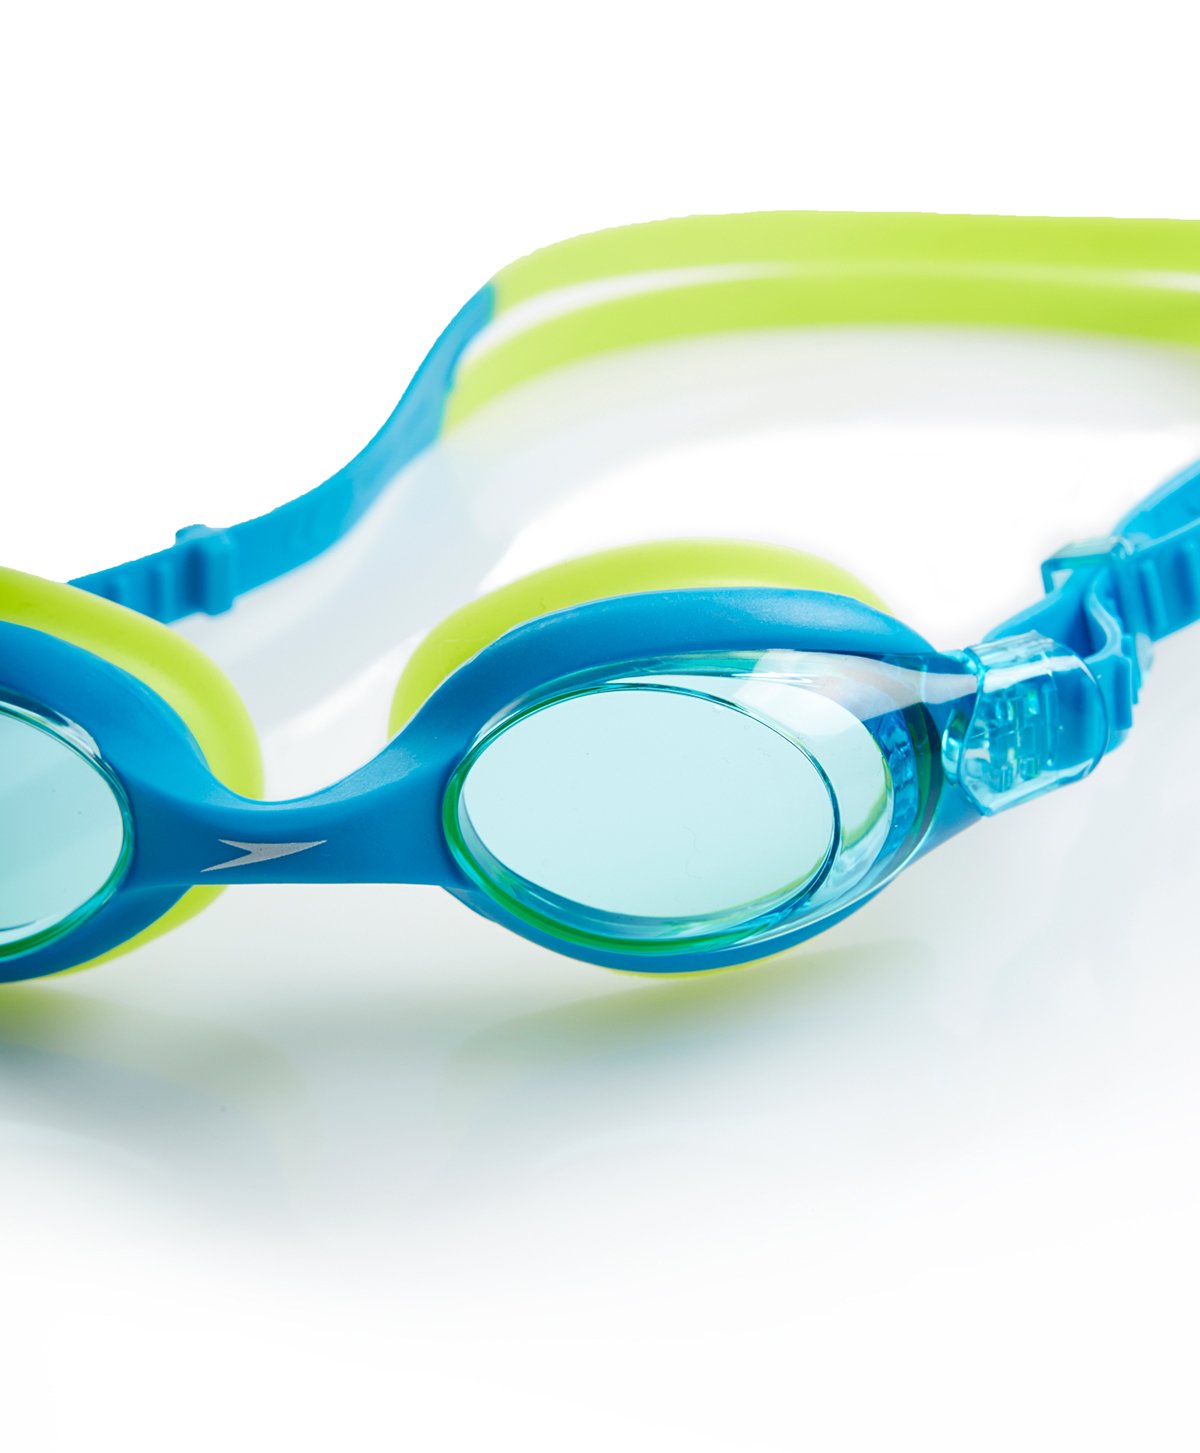 Speedo 8073598029 Blend Skoogle Goggles (Blue/Green) - For Kids age 2 to 6 Years - Best Price online Prokicksports.com